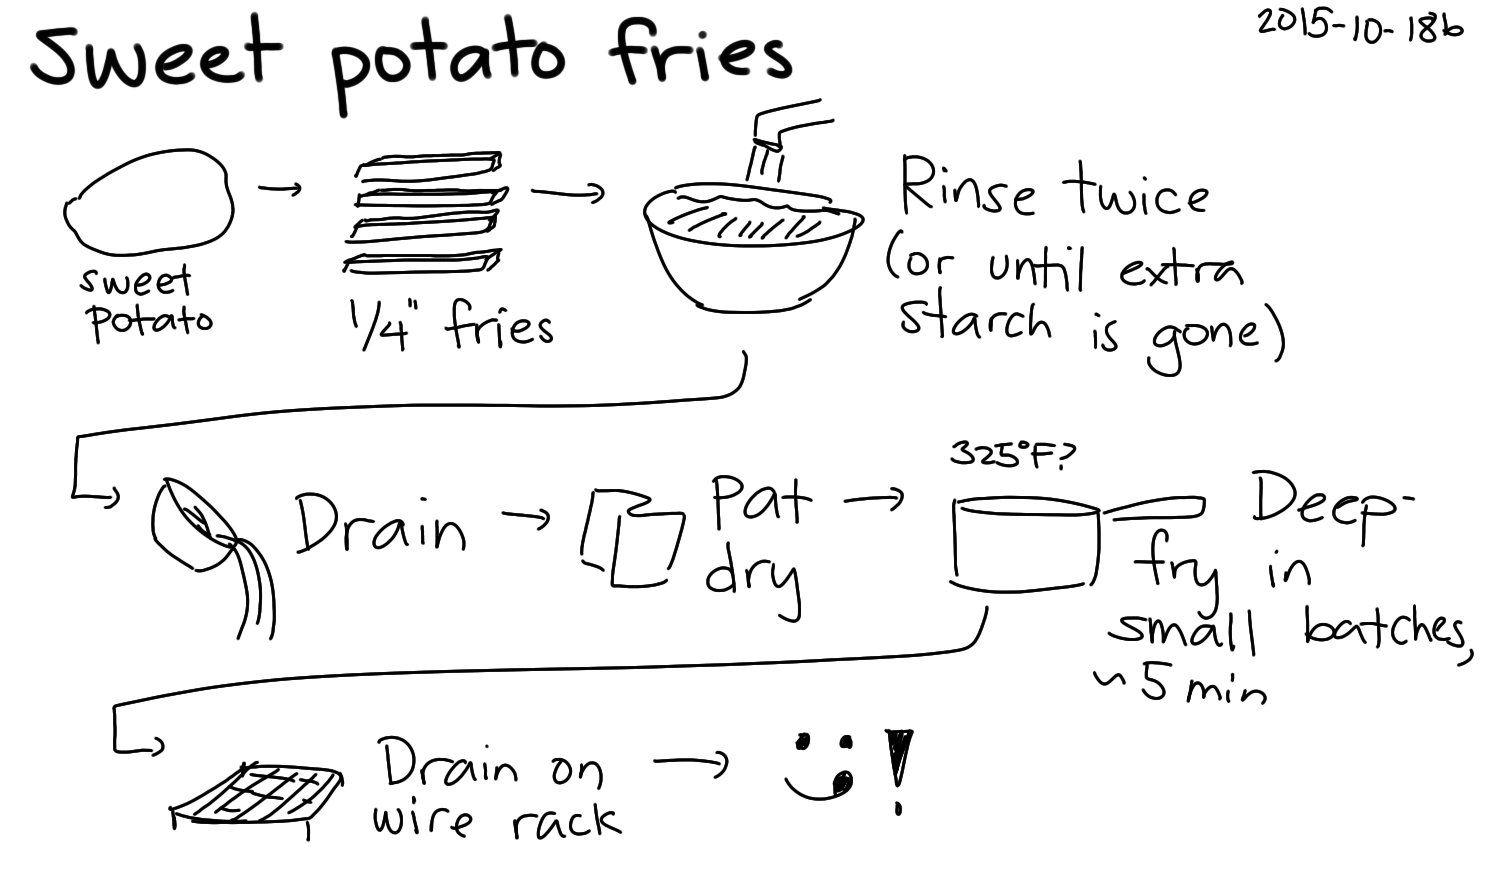 2015-10-18b Sweet potato fries -- index card #cooking.png